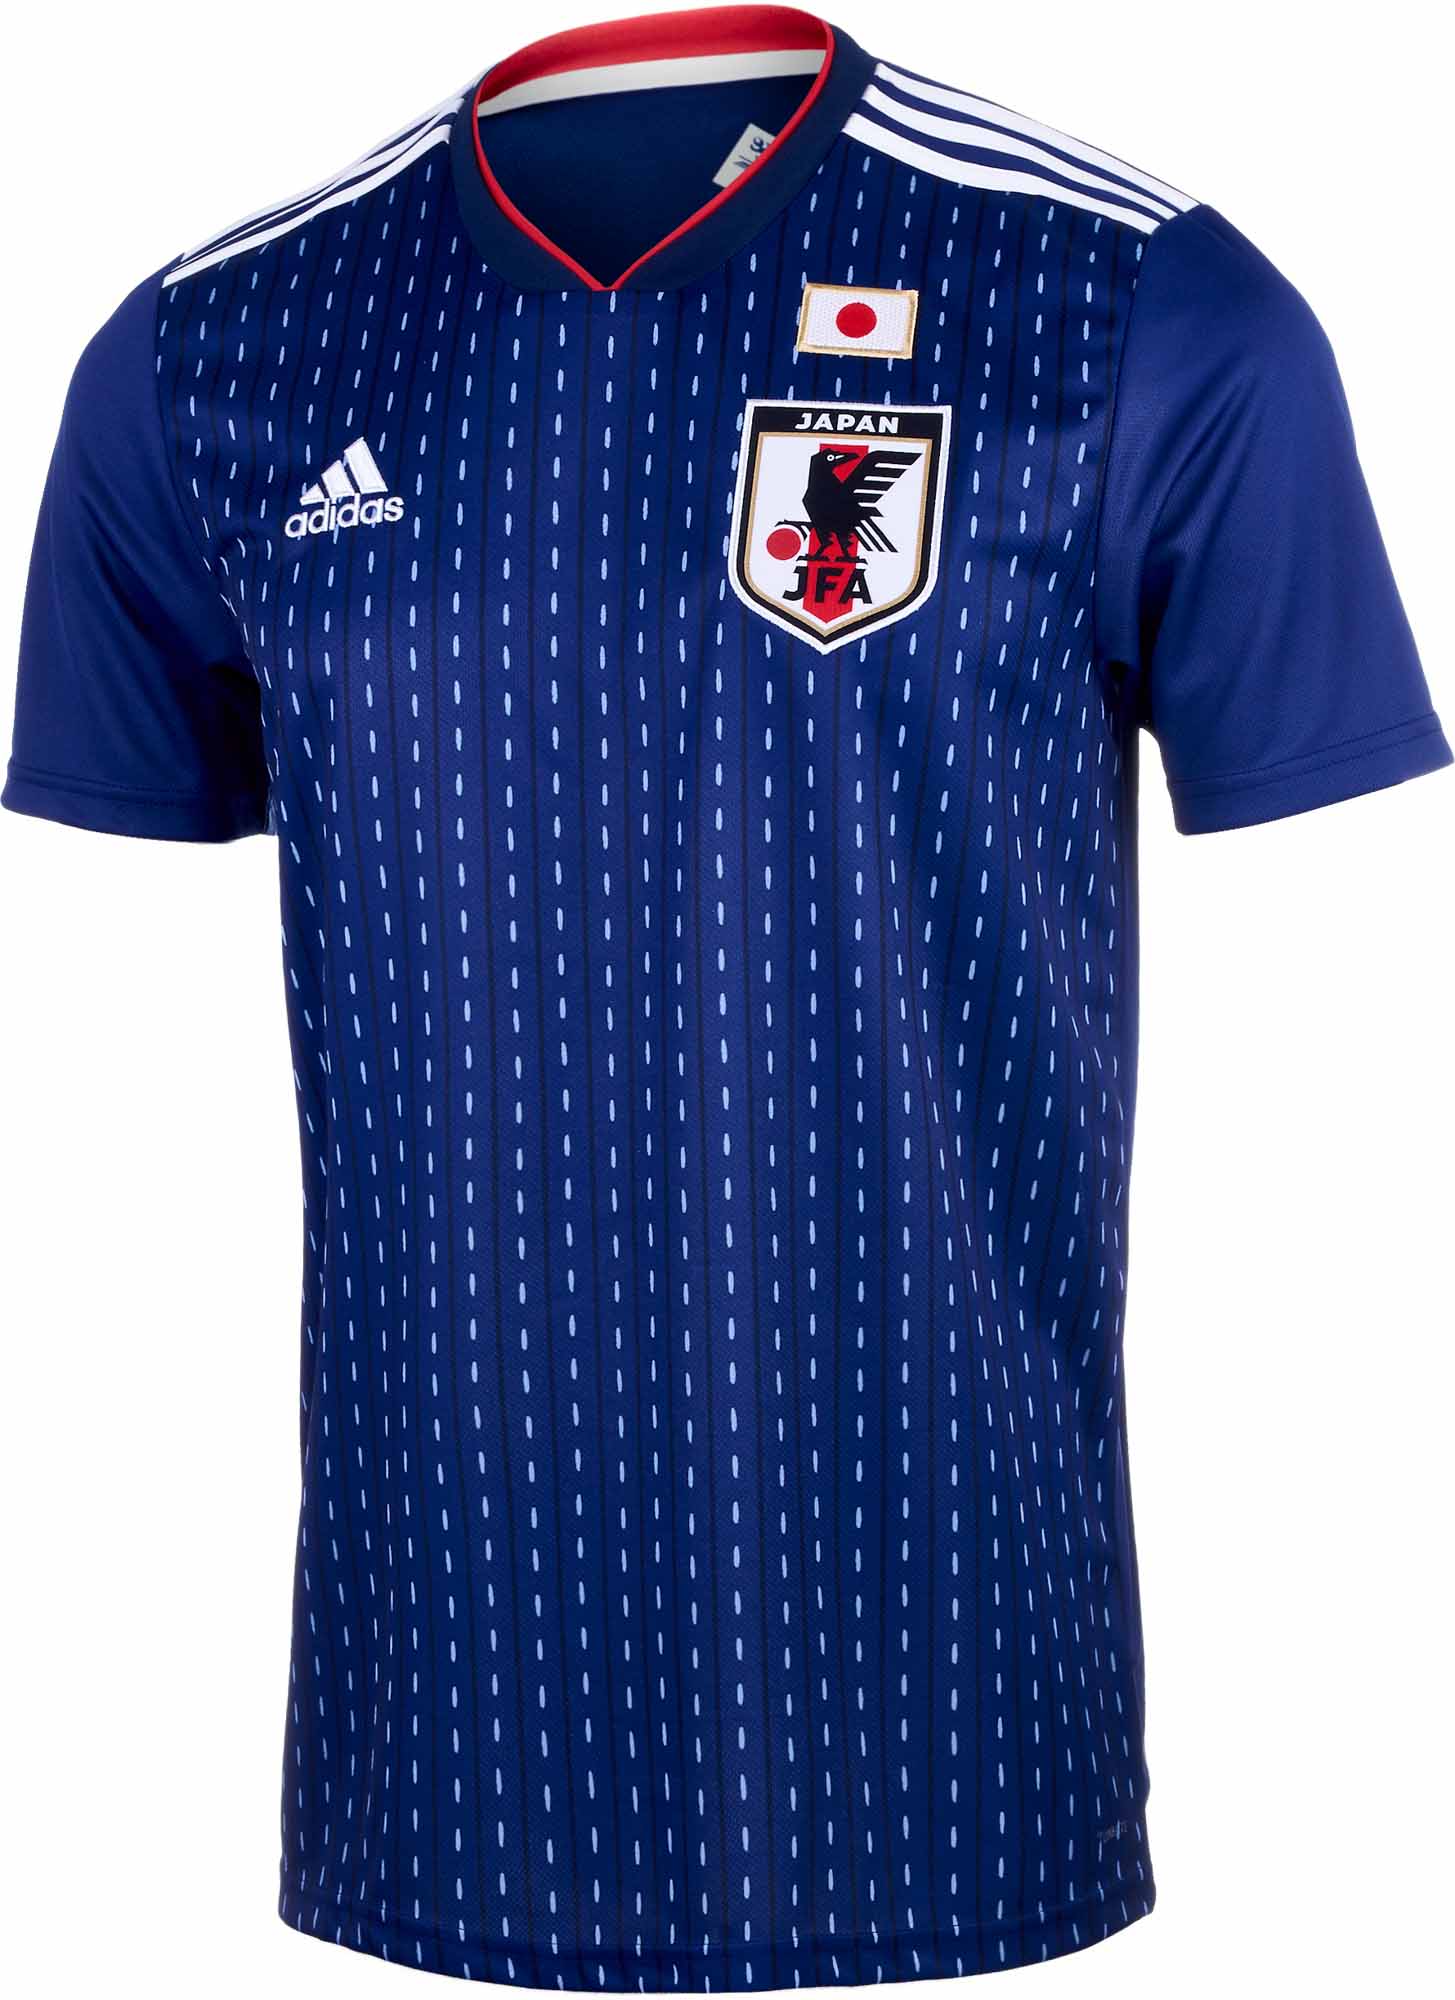 japan football jersey 2018